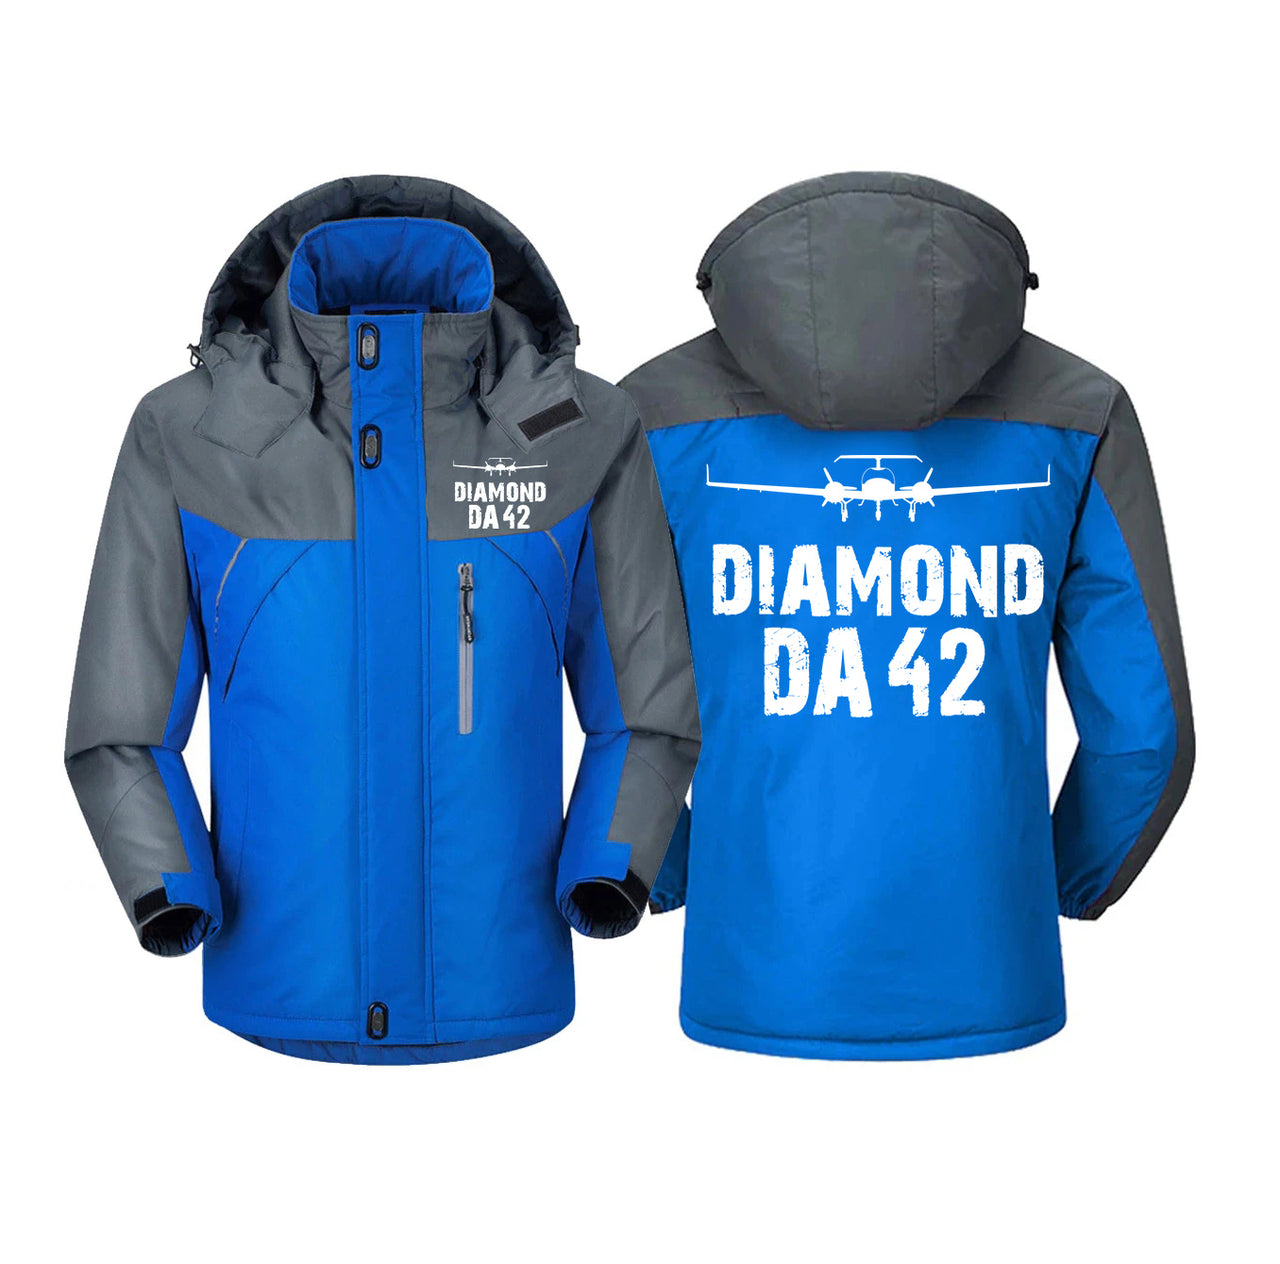 Diamond DA42 & Plane Designed Thick Winter Jackets